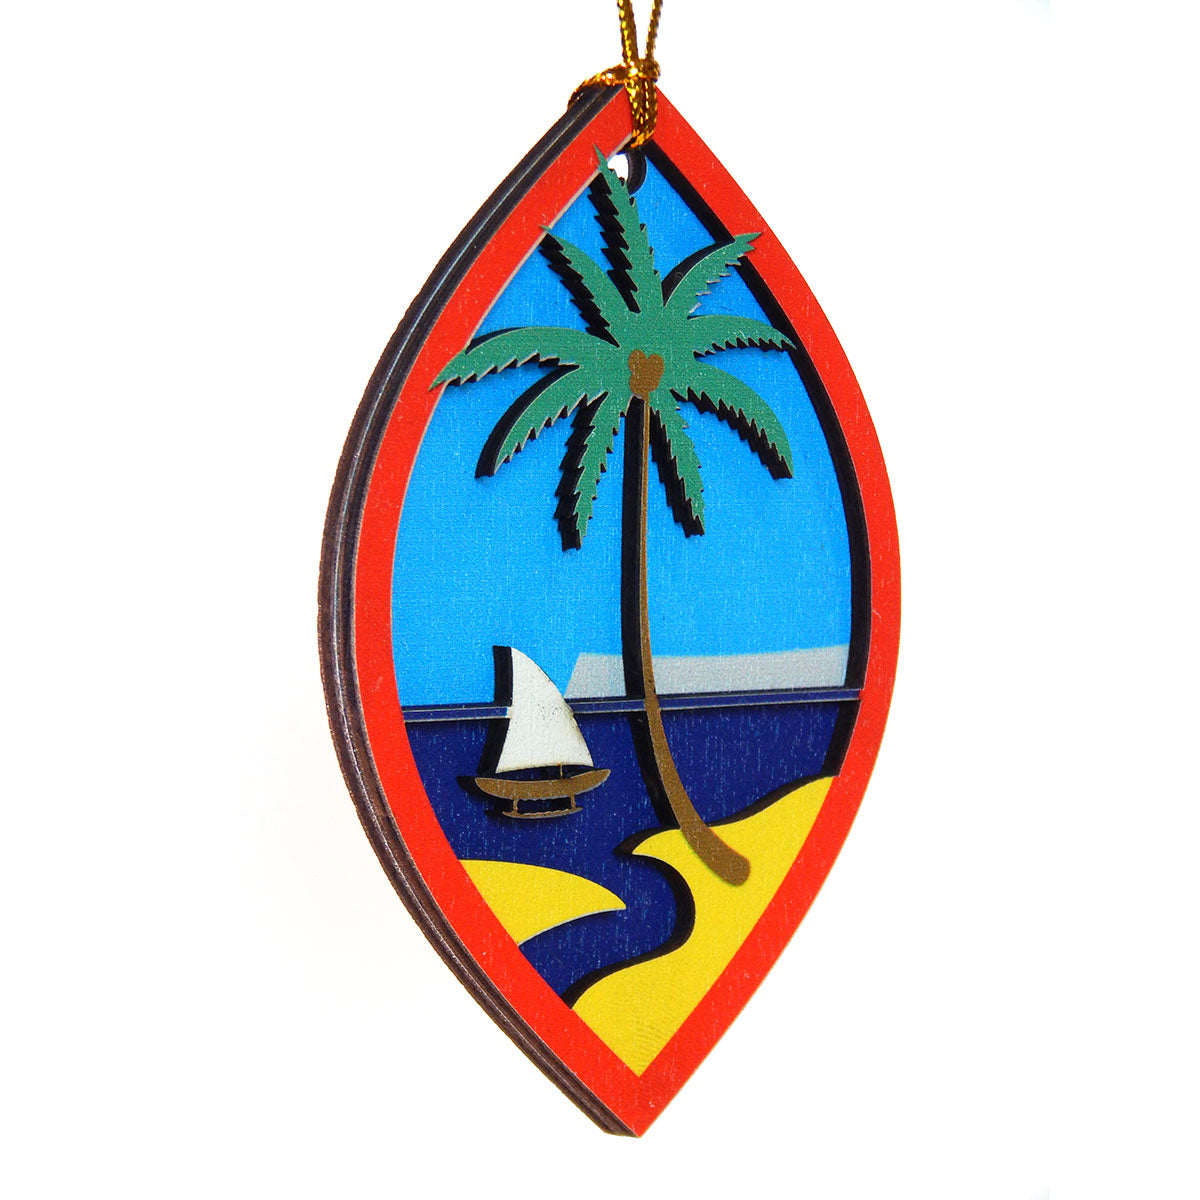 Guam Seal Layered Wood Ornament